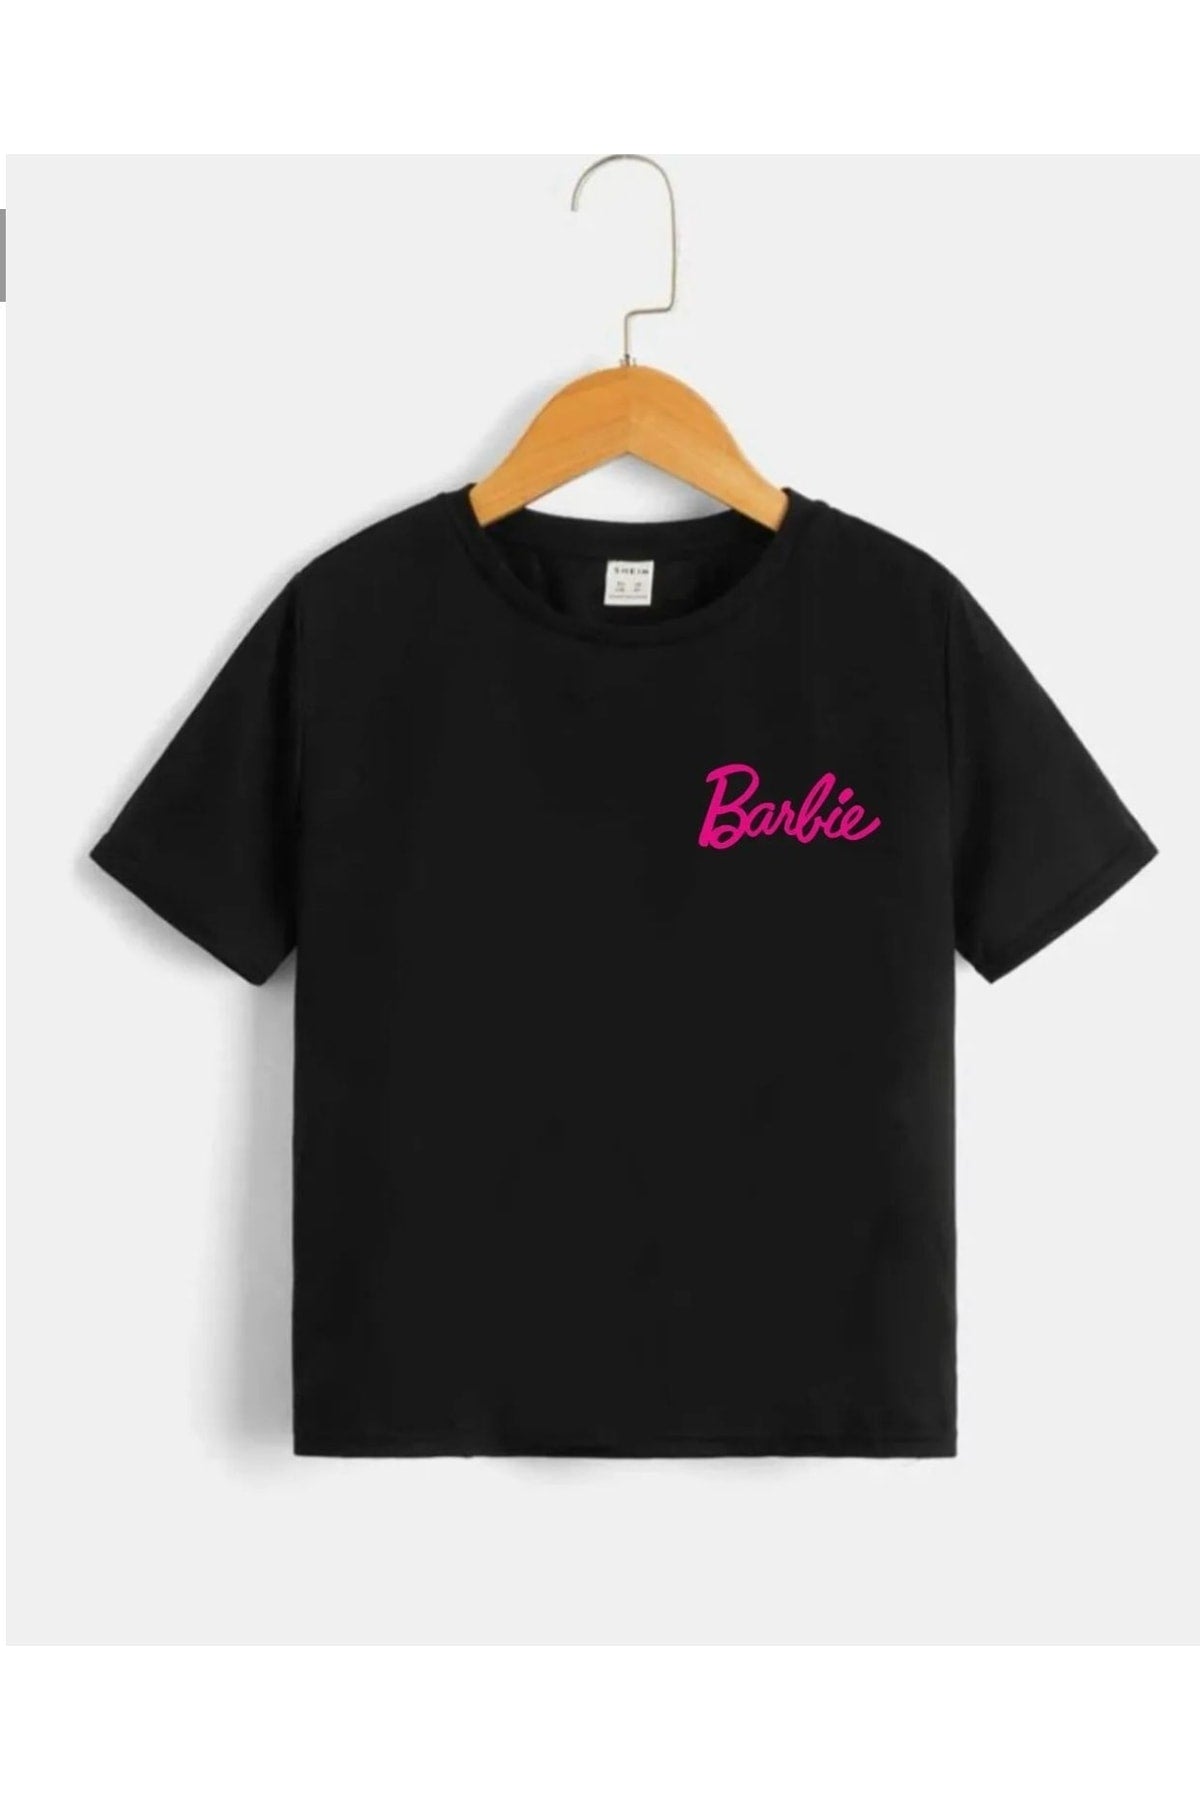 Black Barbie Printed Kids T-shirt